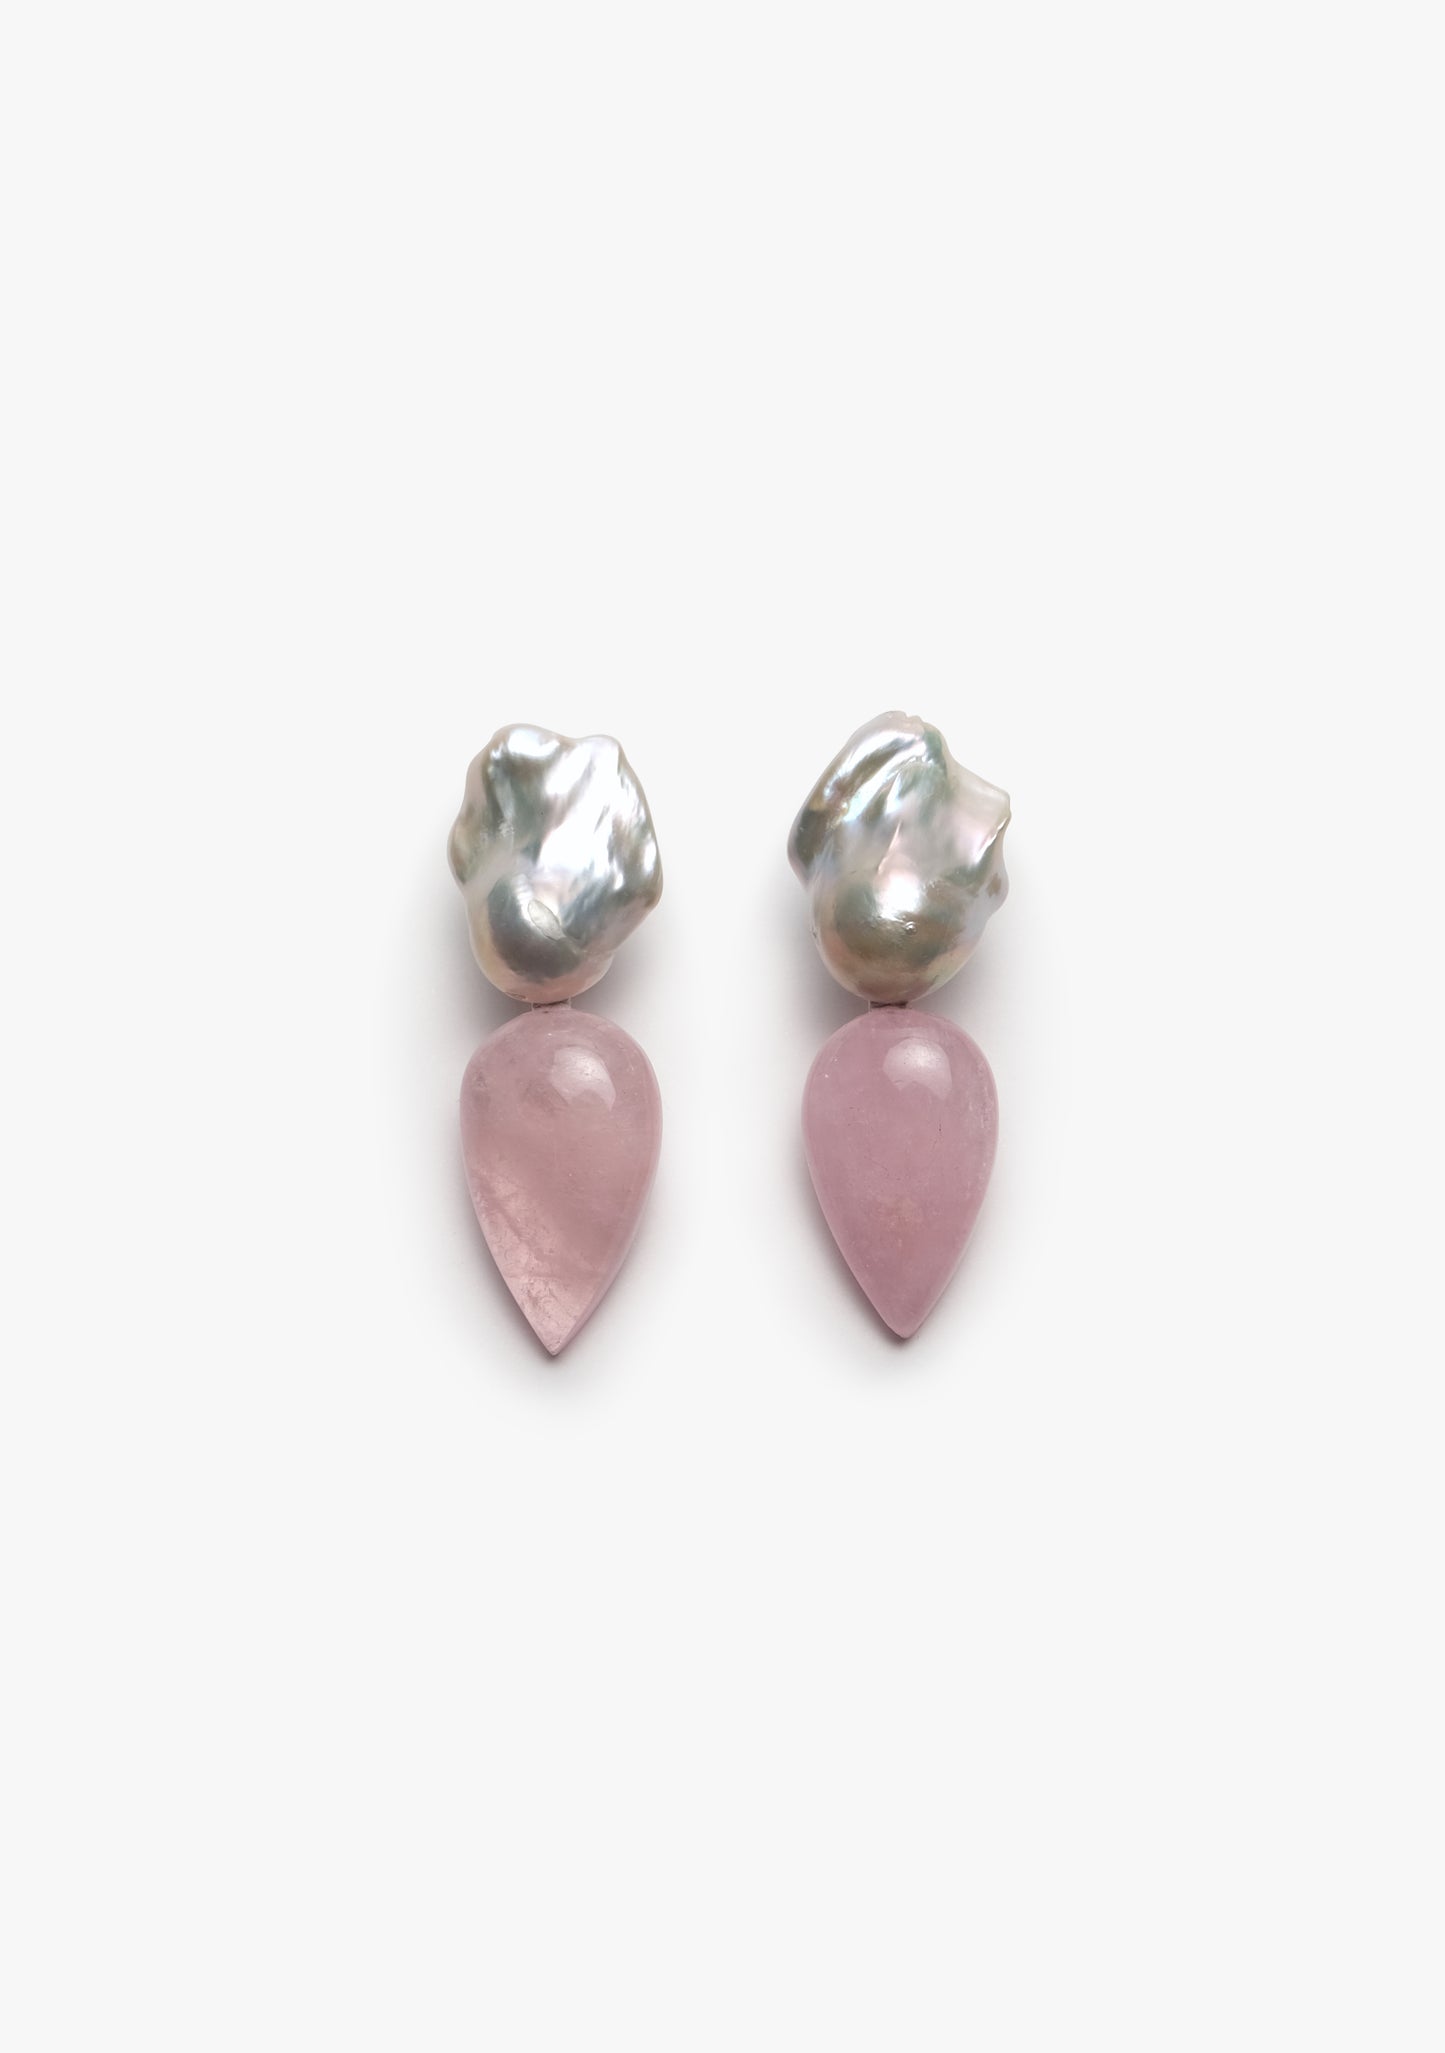 Earring: rose quartz and baroque pearl